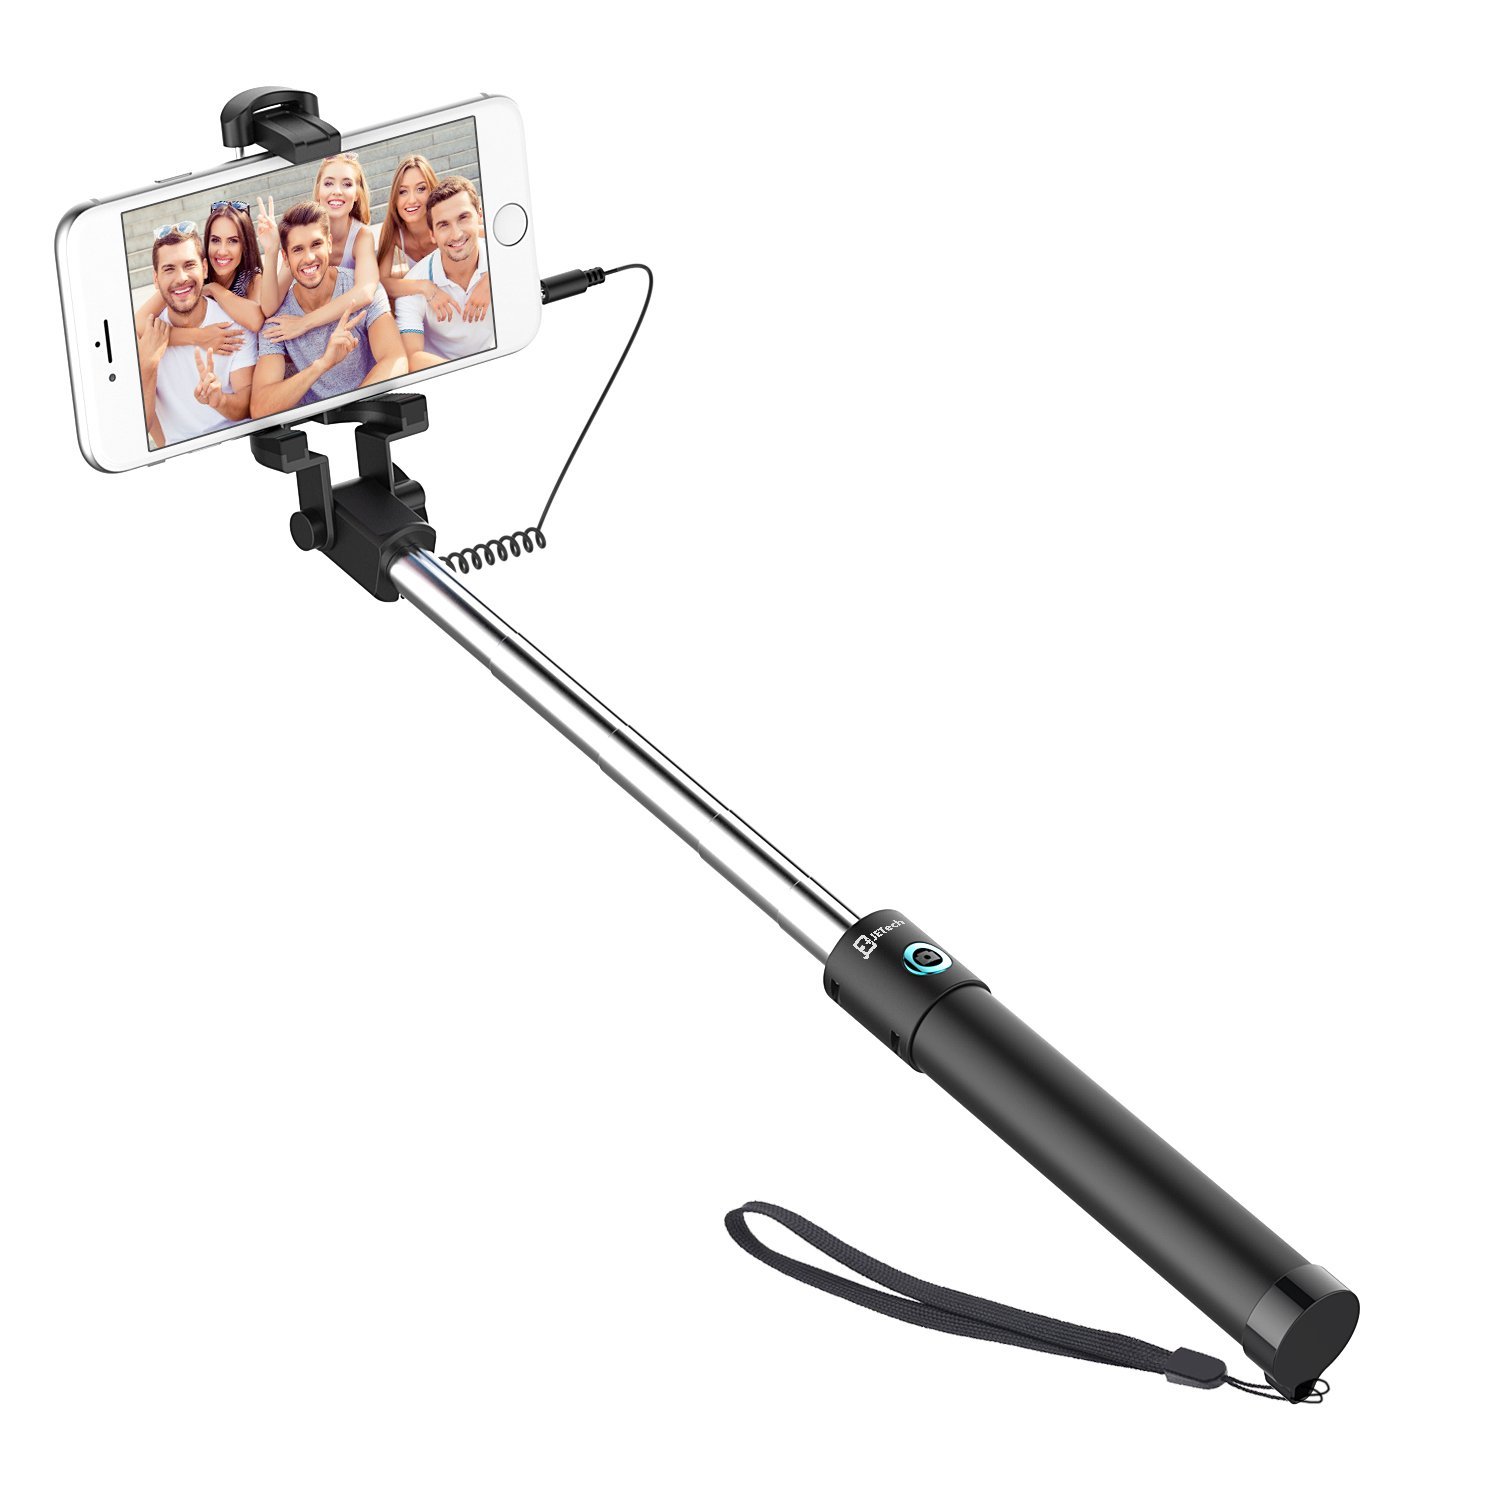 Review of JETech Battery Free Selfie Stick Extendable Cable Control Self-portrait Monopod Pole